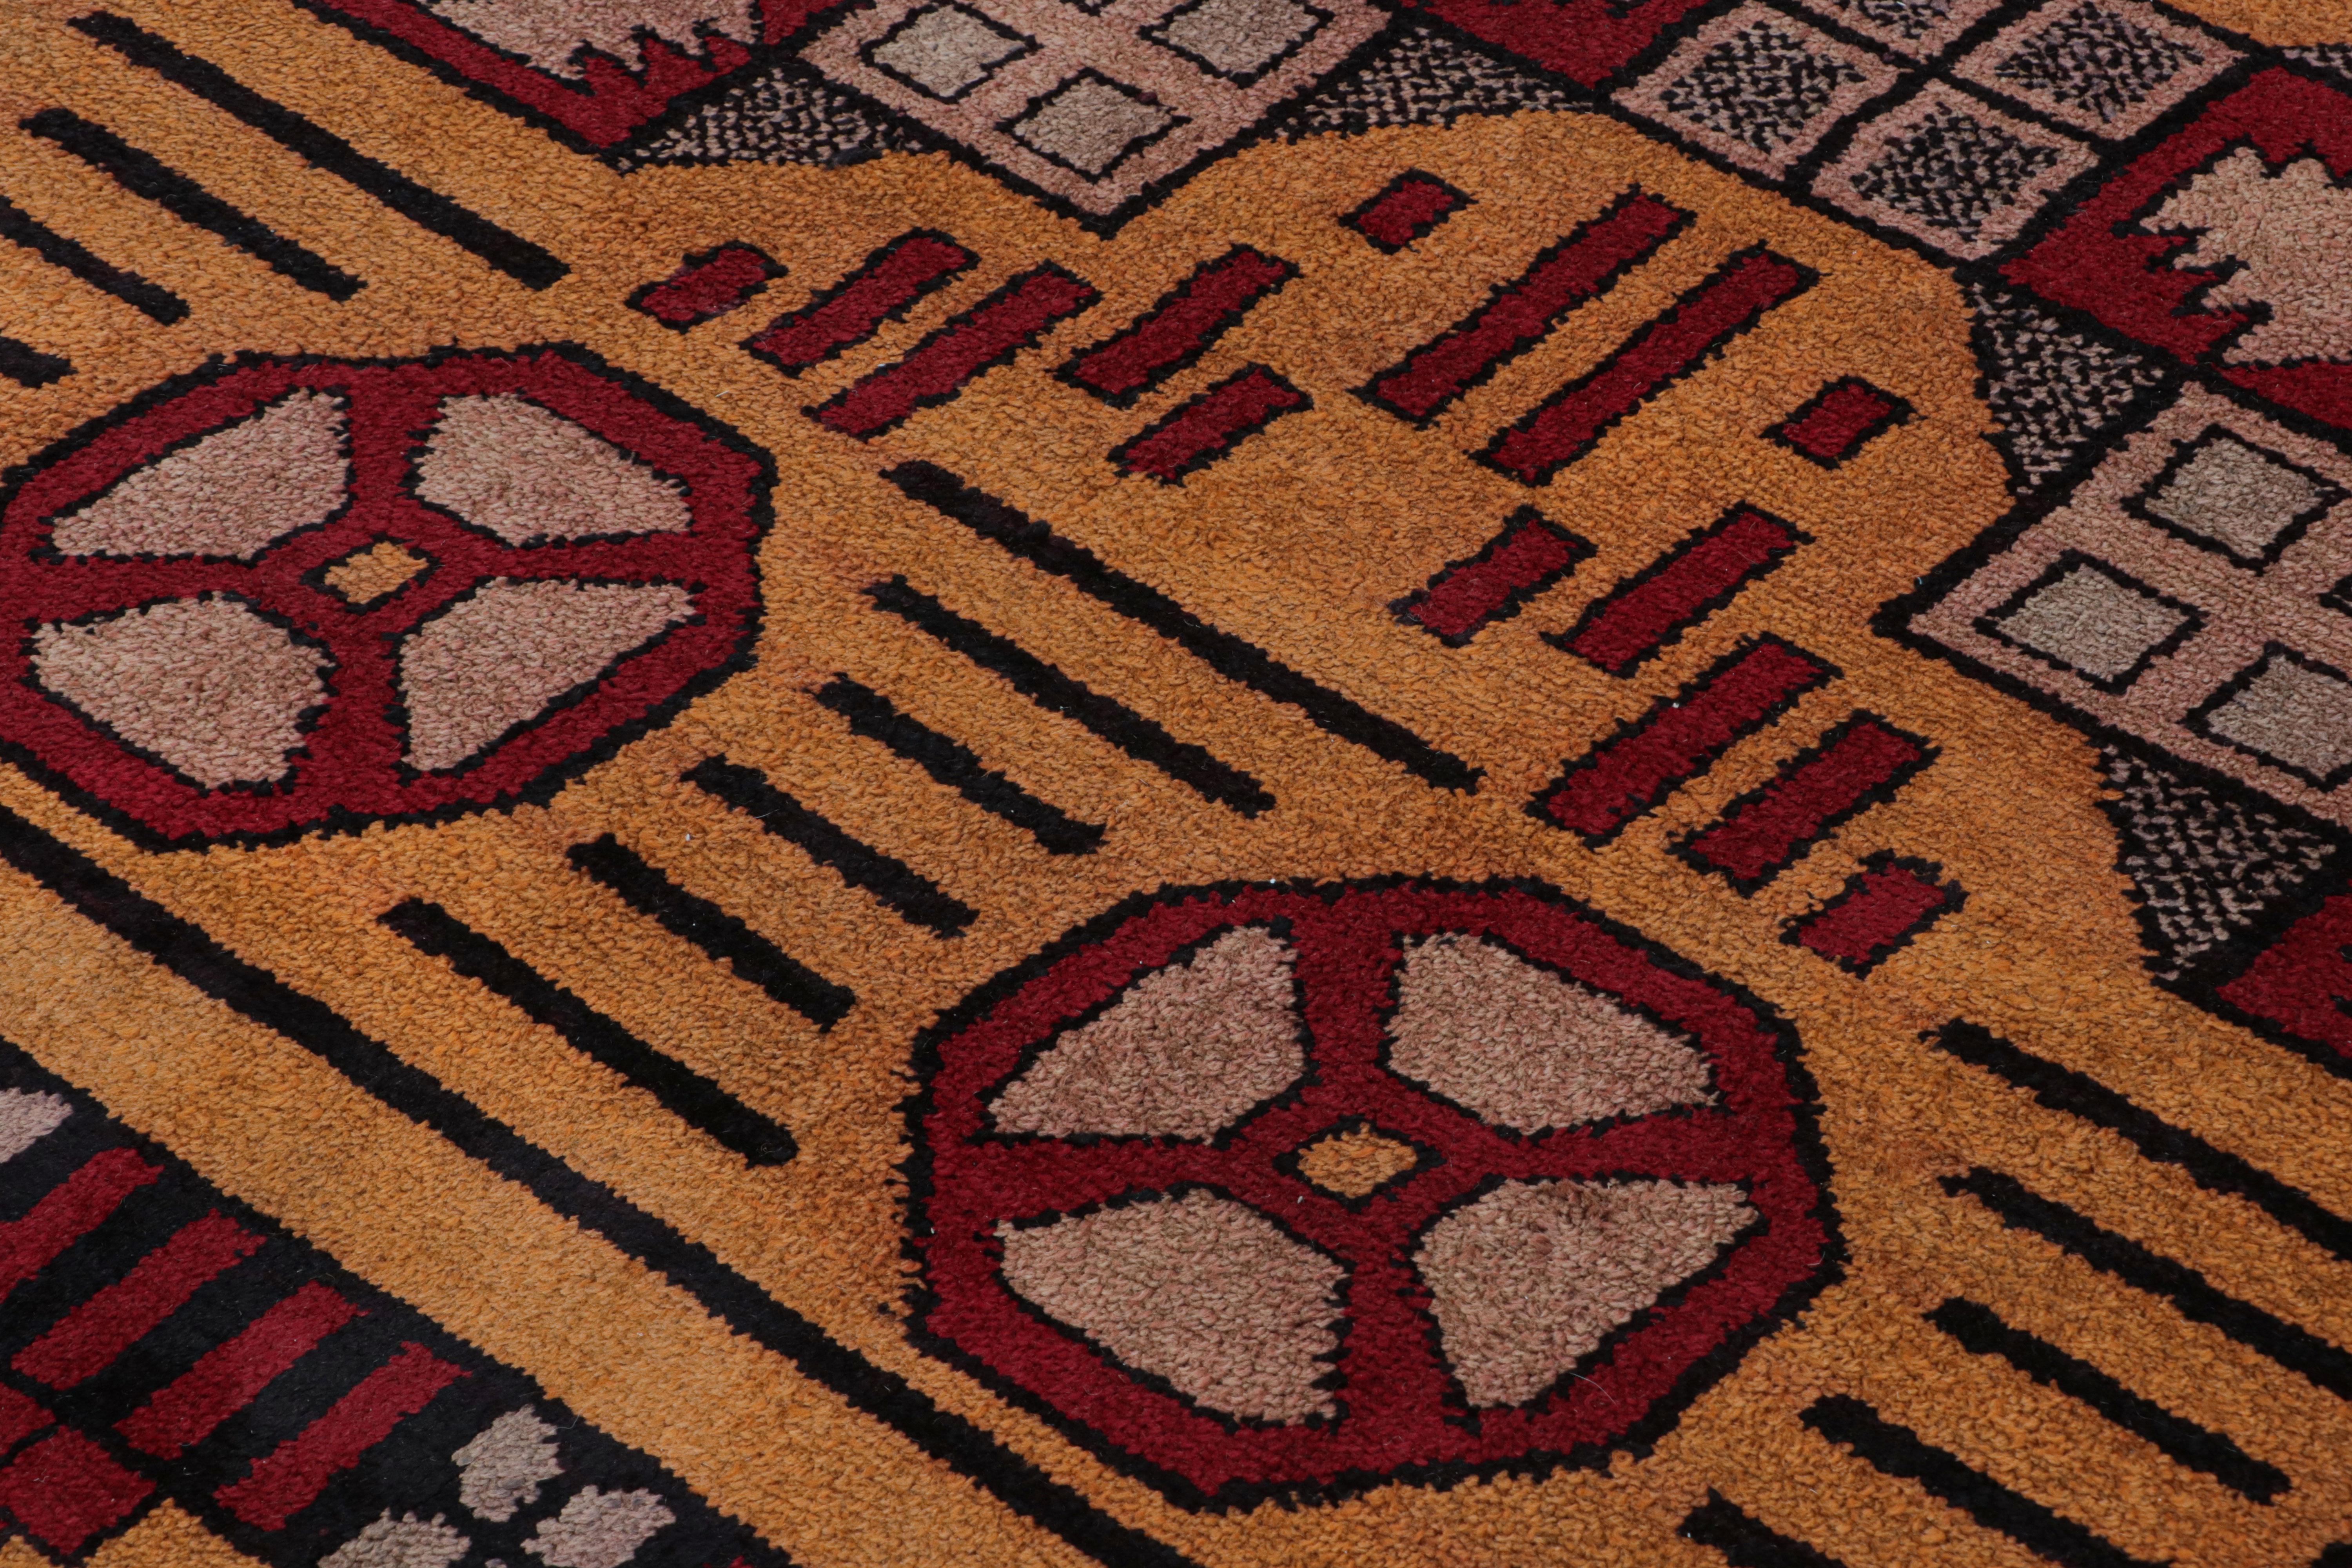 axminster carpet patterns